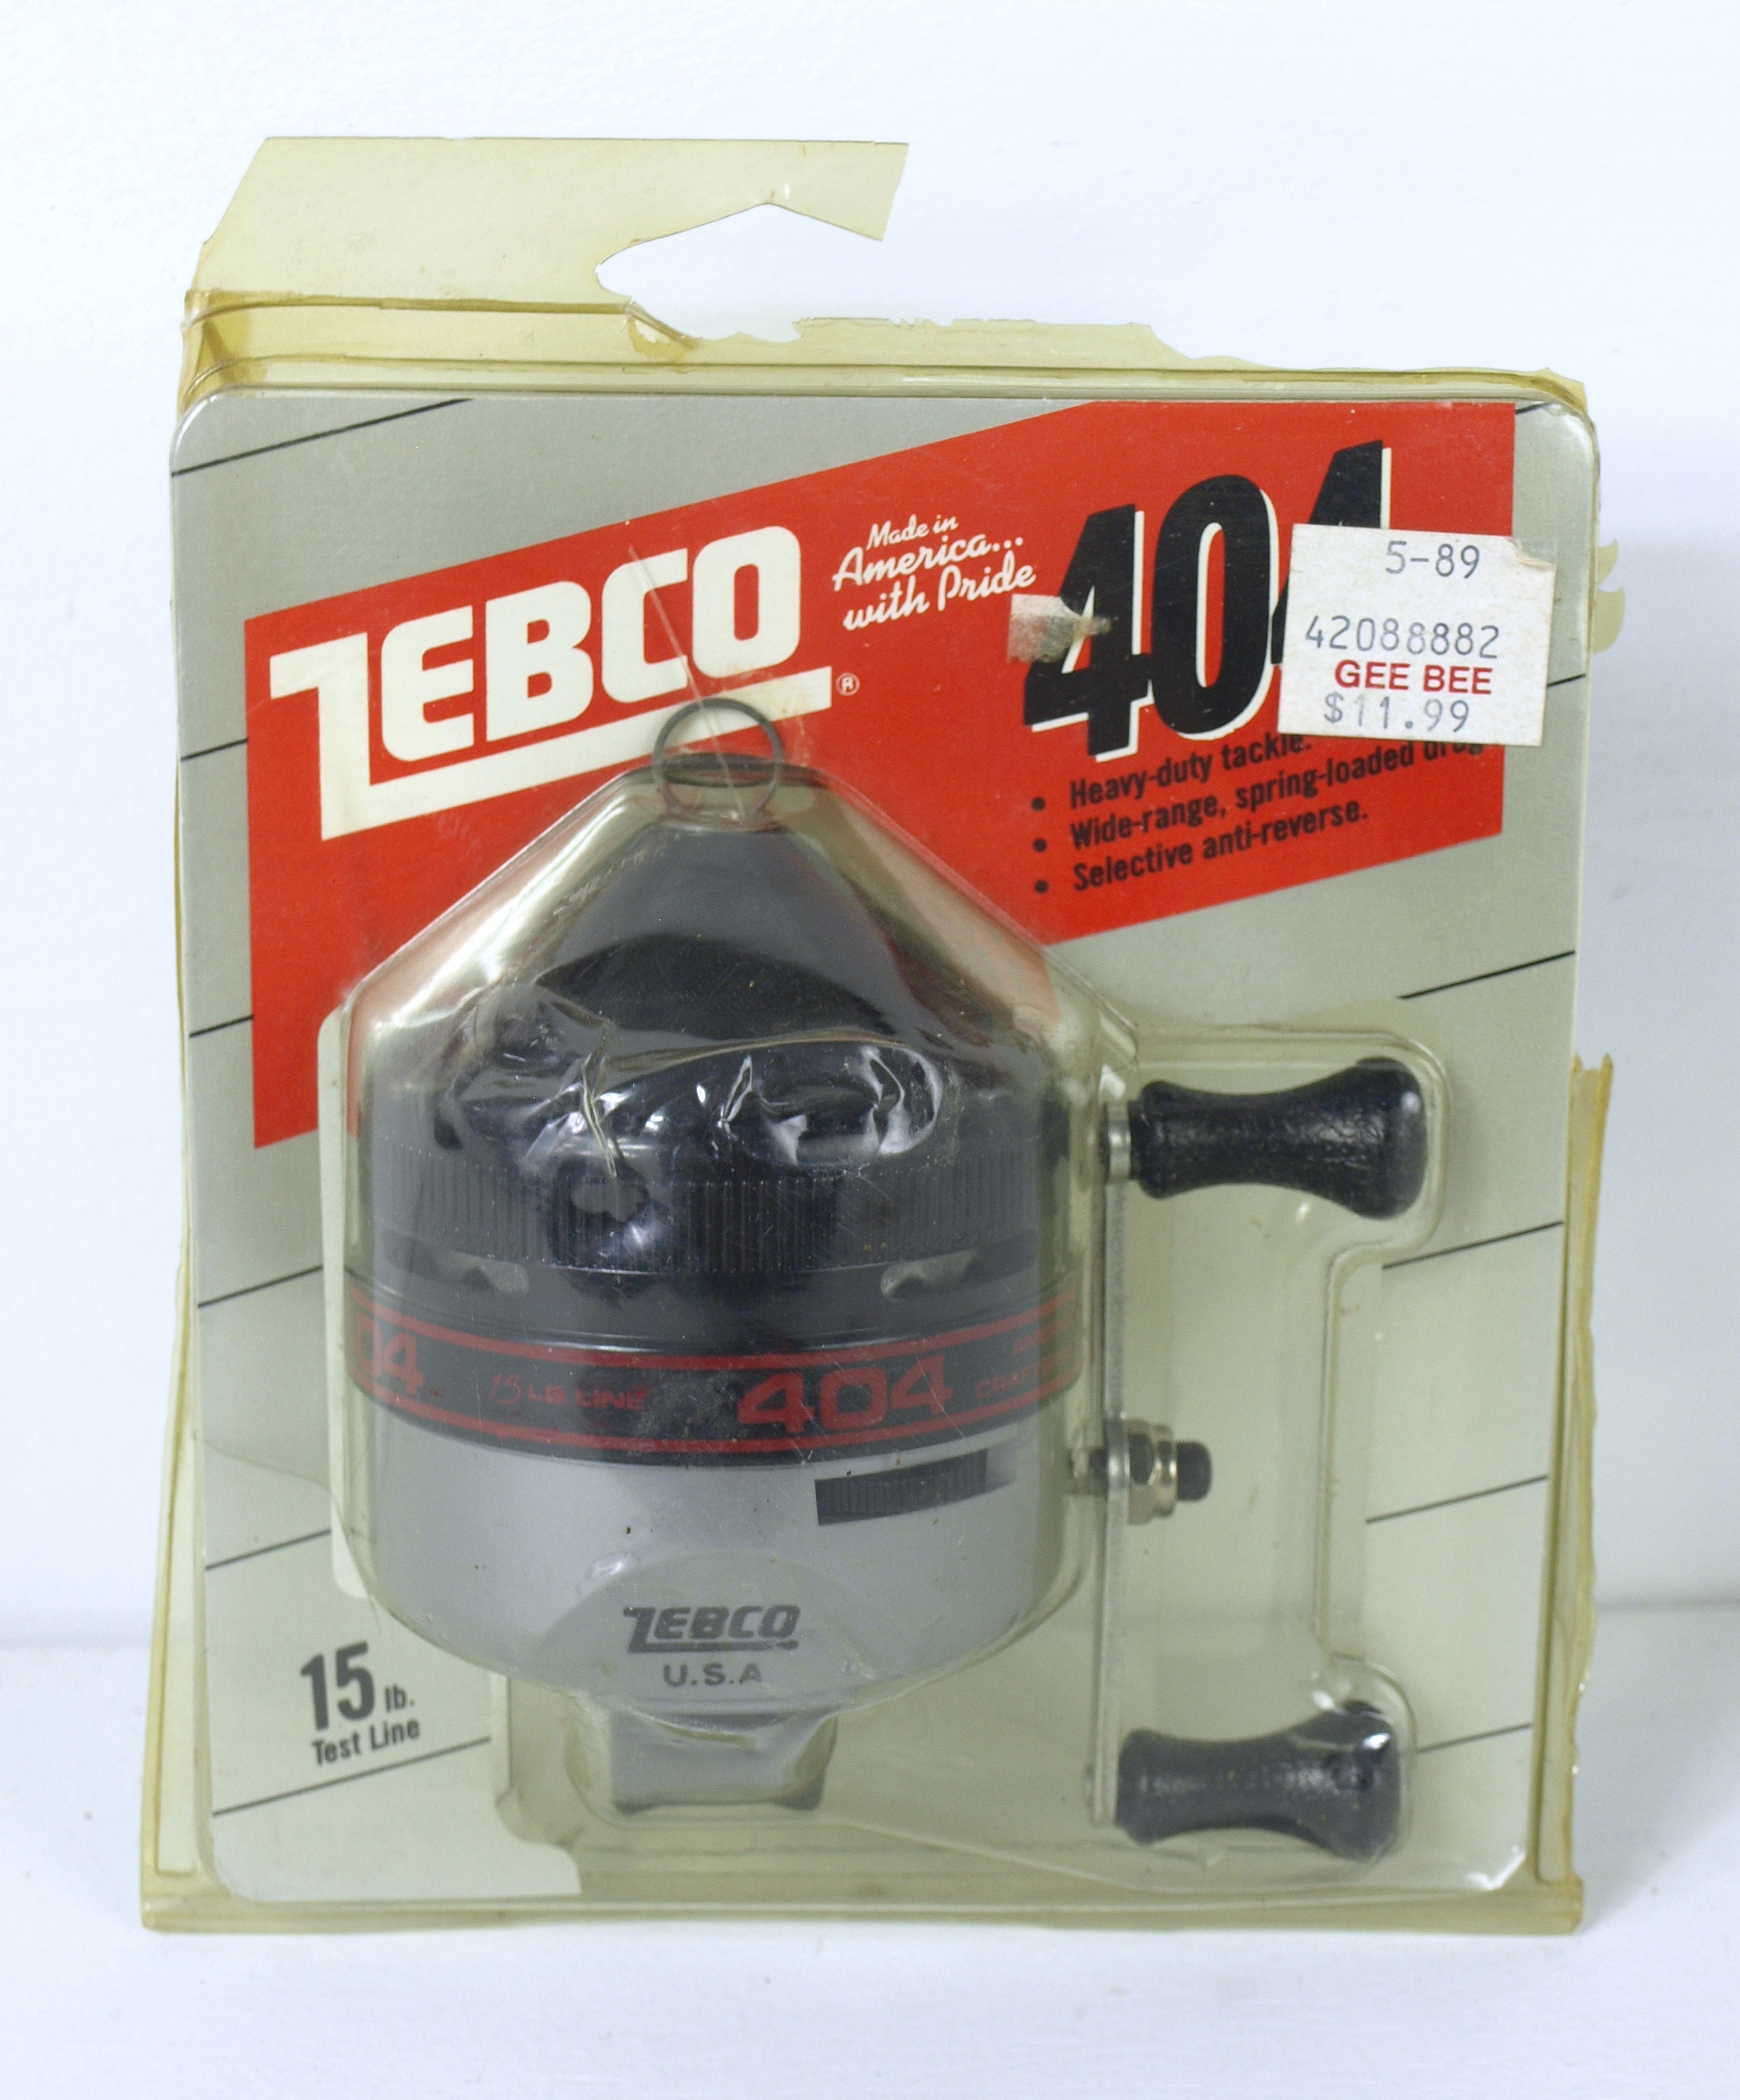 Vintage Zebco 404 Fishing Reel in Unopened Package C 1986 Brunswick Corp  NOS 15lb Test Line 